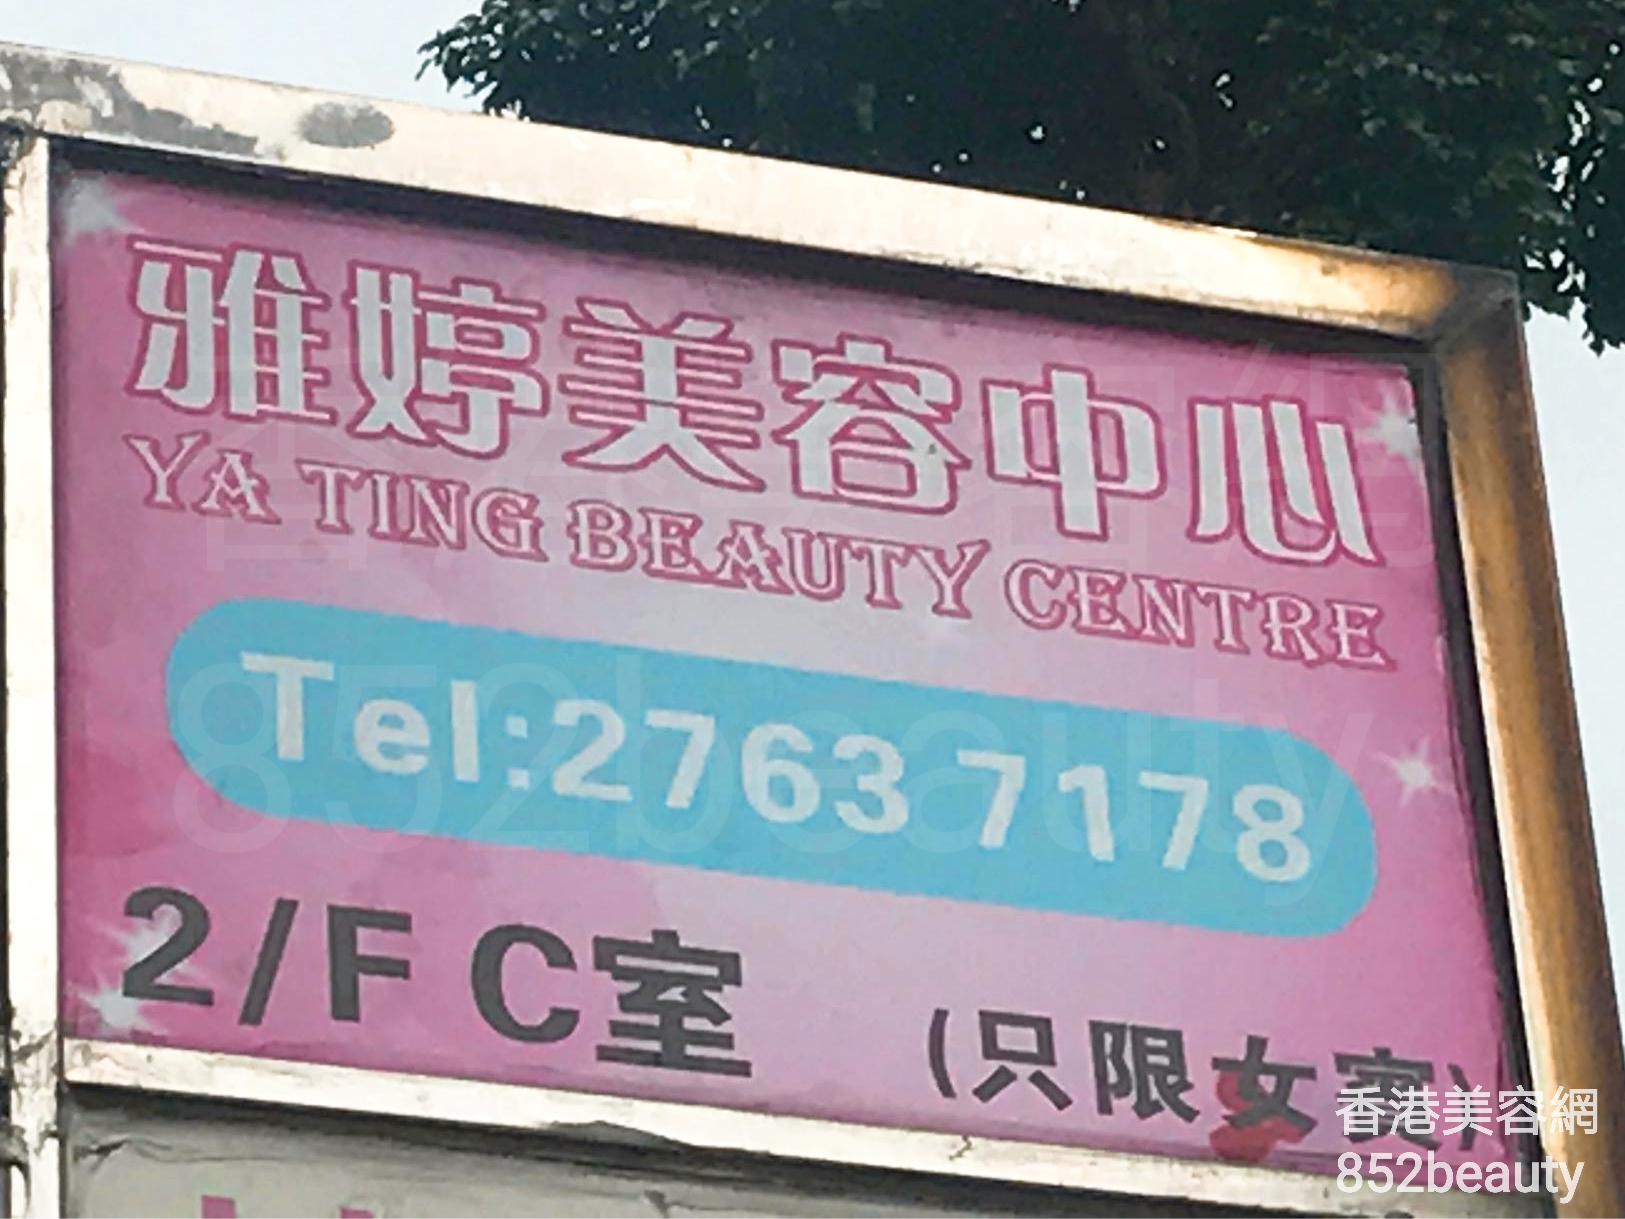 Hair Removal: 雅婷美容中心 Ya Ting Beauty Centre